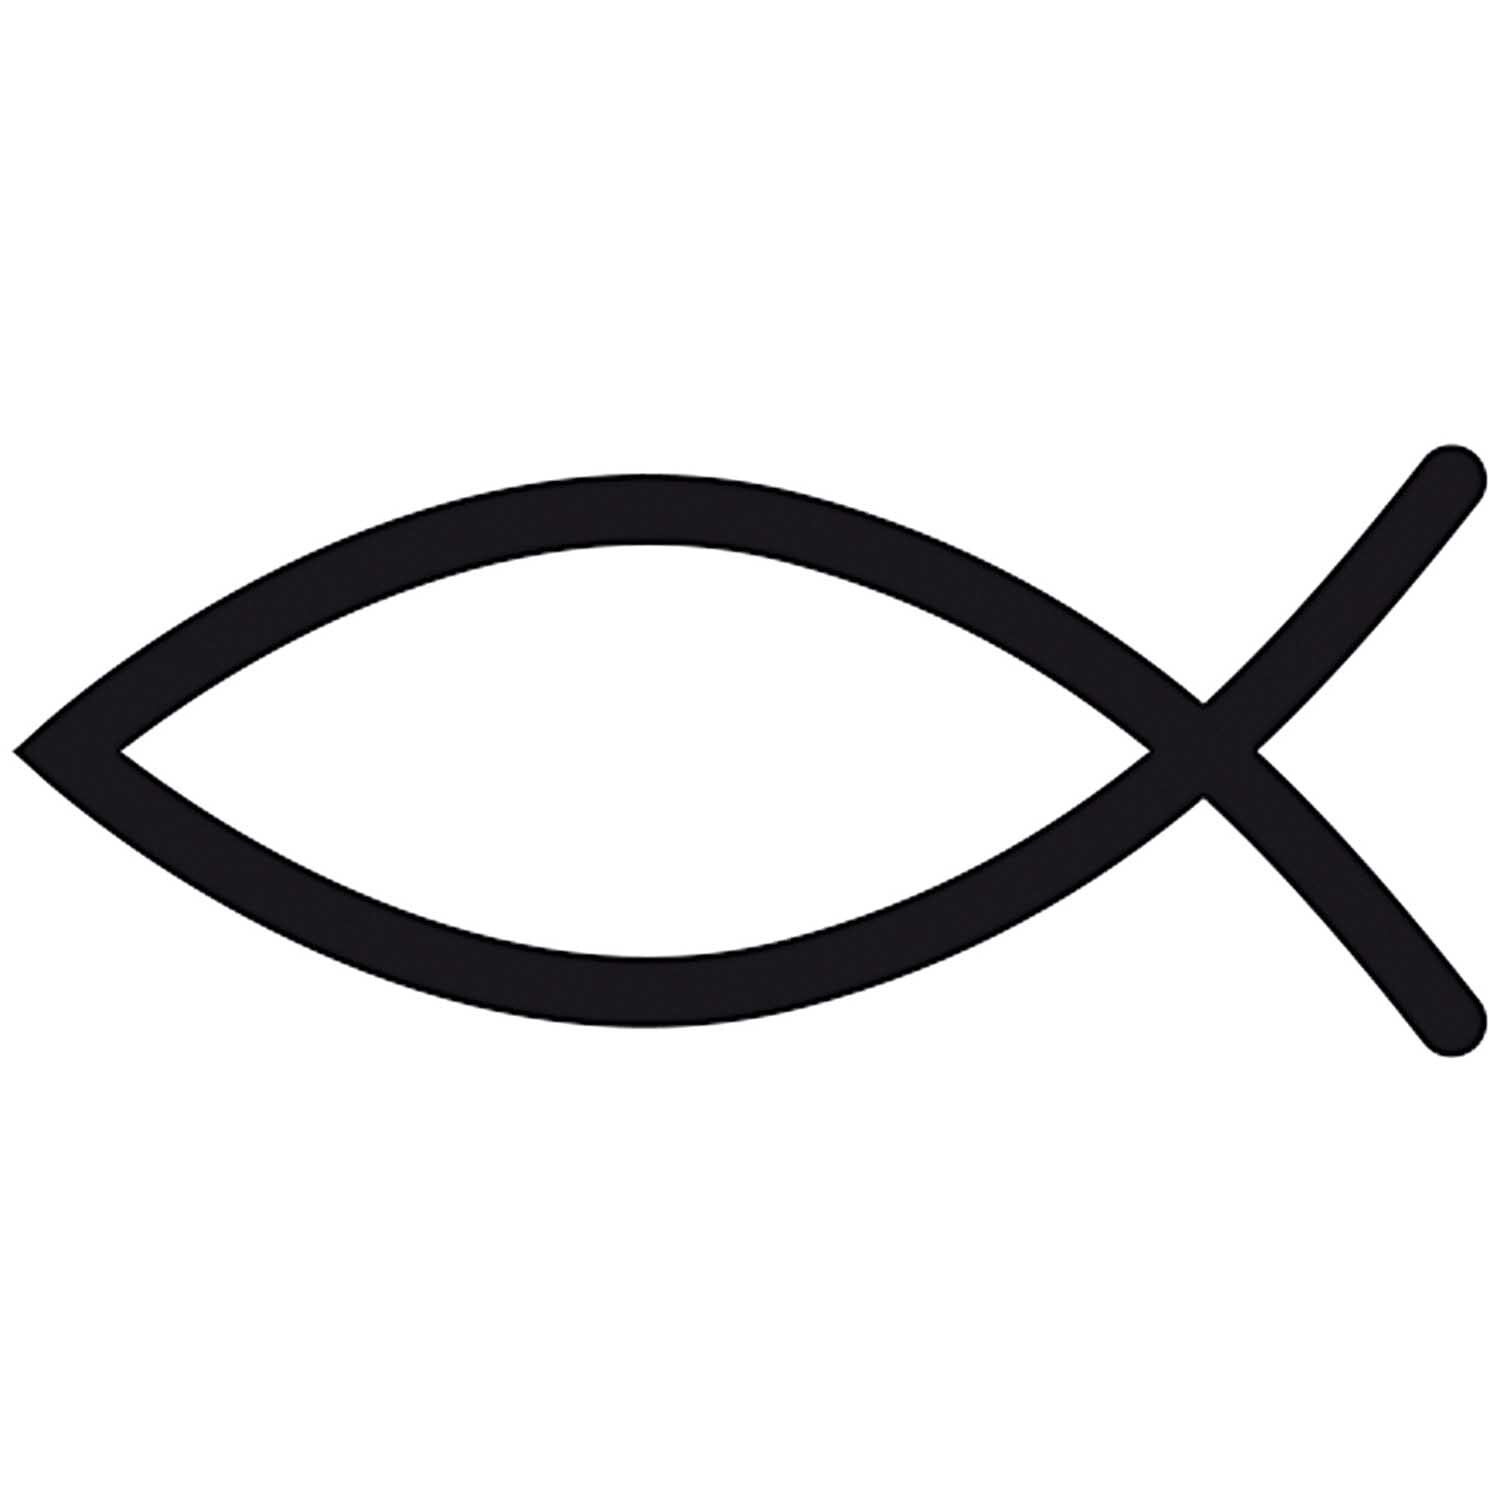 Stempel Fischsymbol 4x4cm